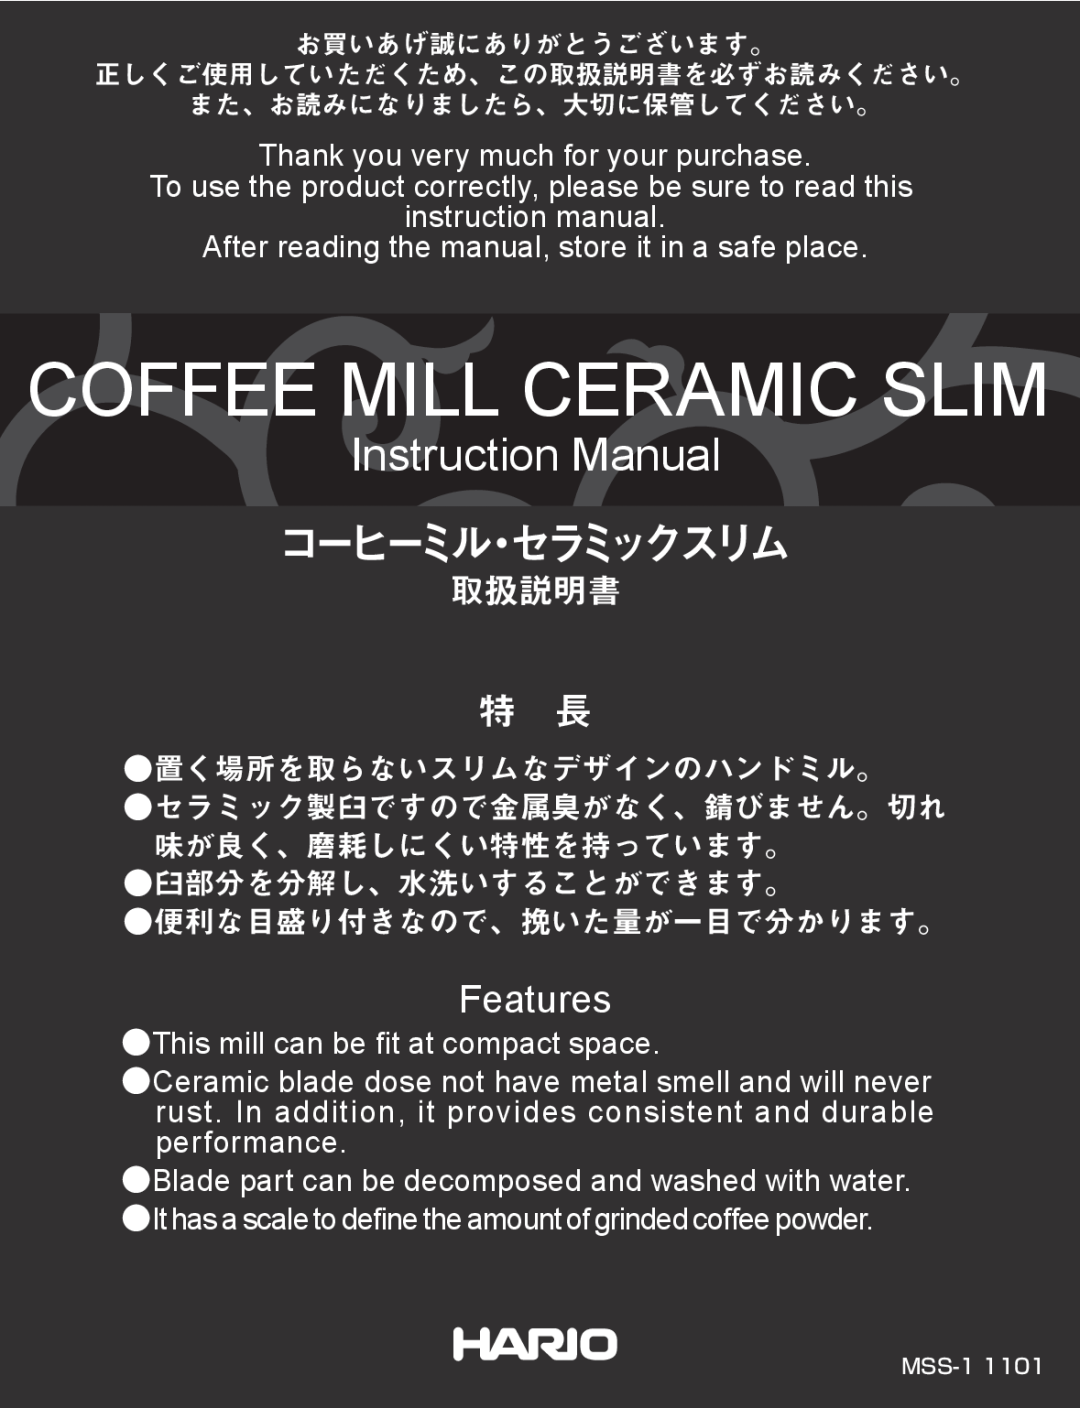 Hario Glass MSS-1 1101 instruction manual Coffee Mill Ceramic Slim, Instruction Manual, コーヒーミル・セラミックスリム, Features, 取扱説明書 